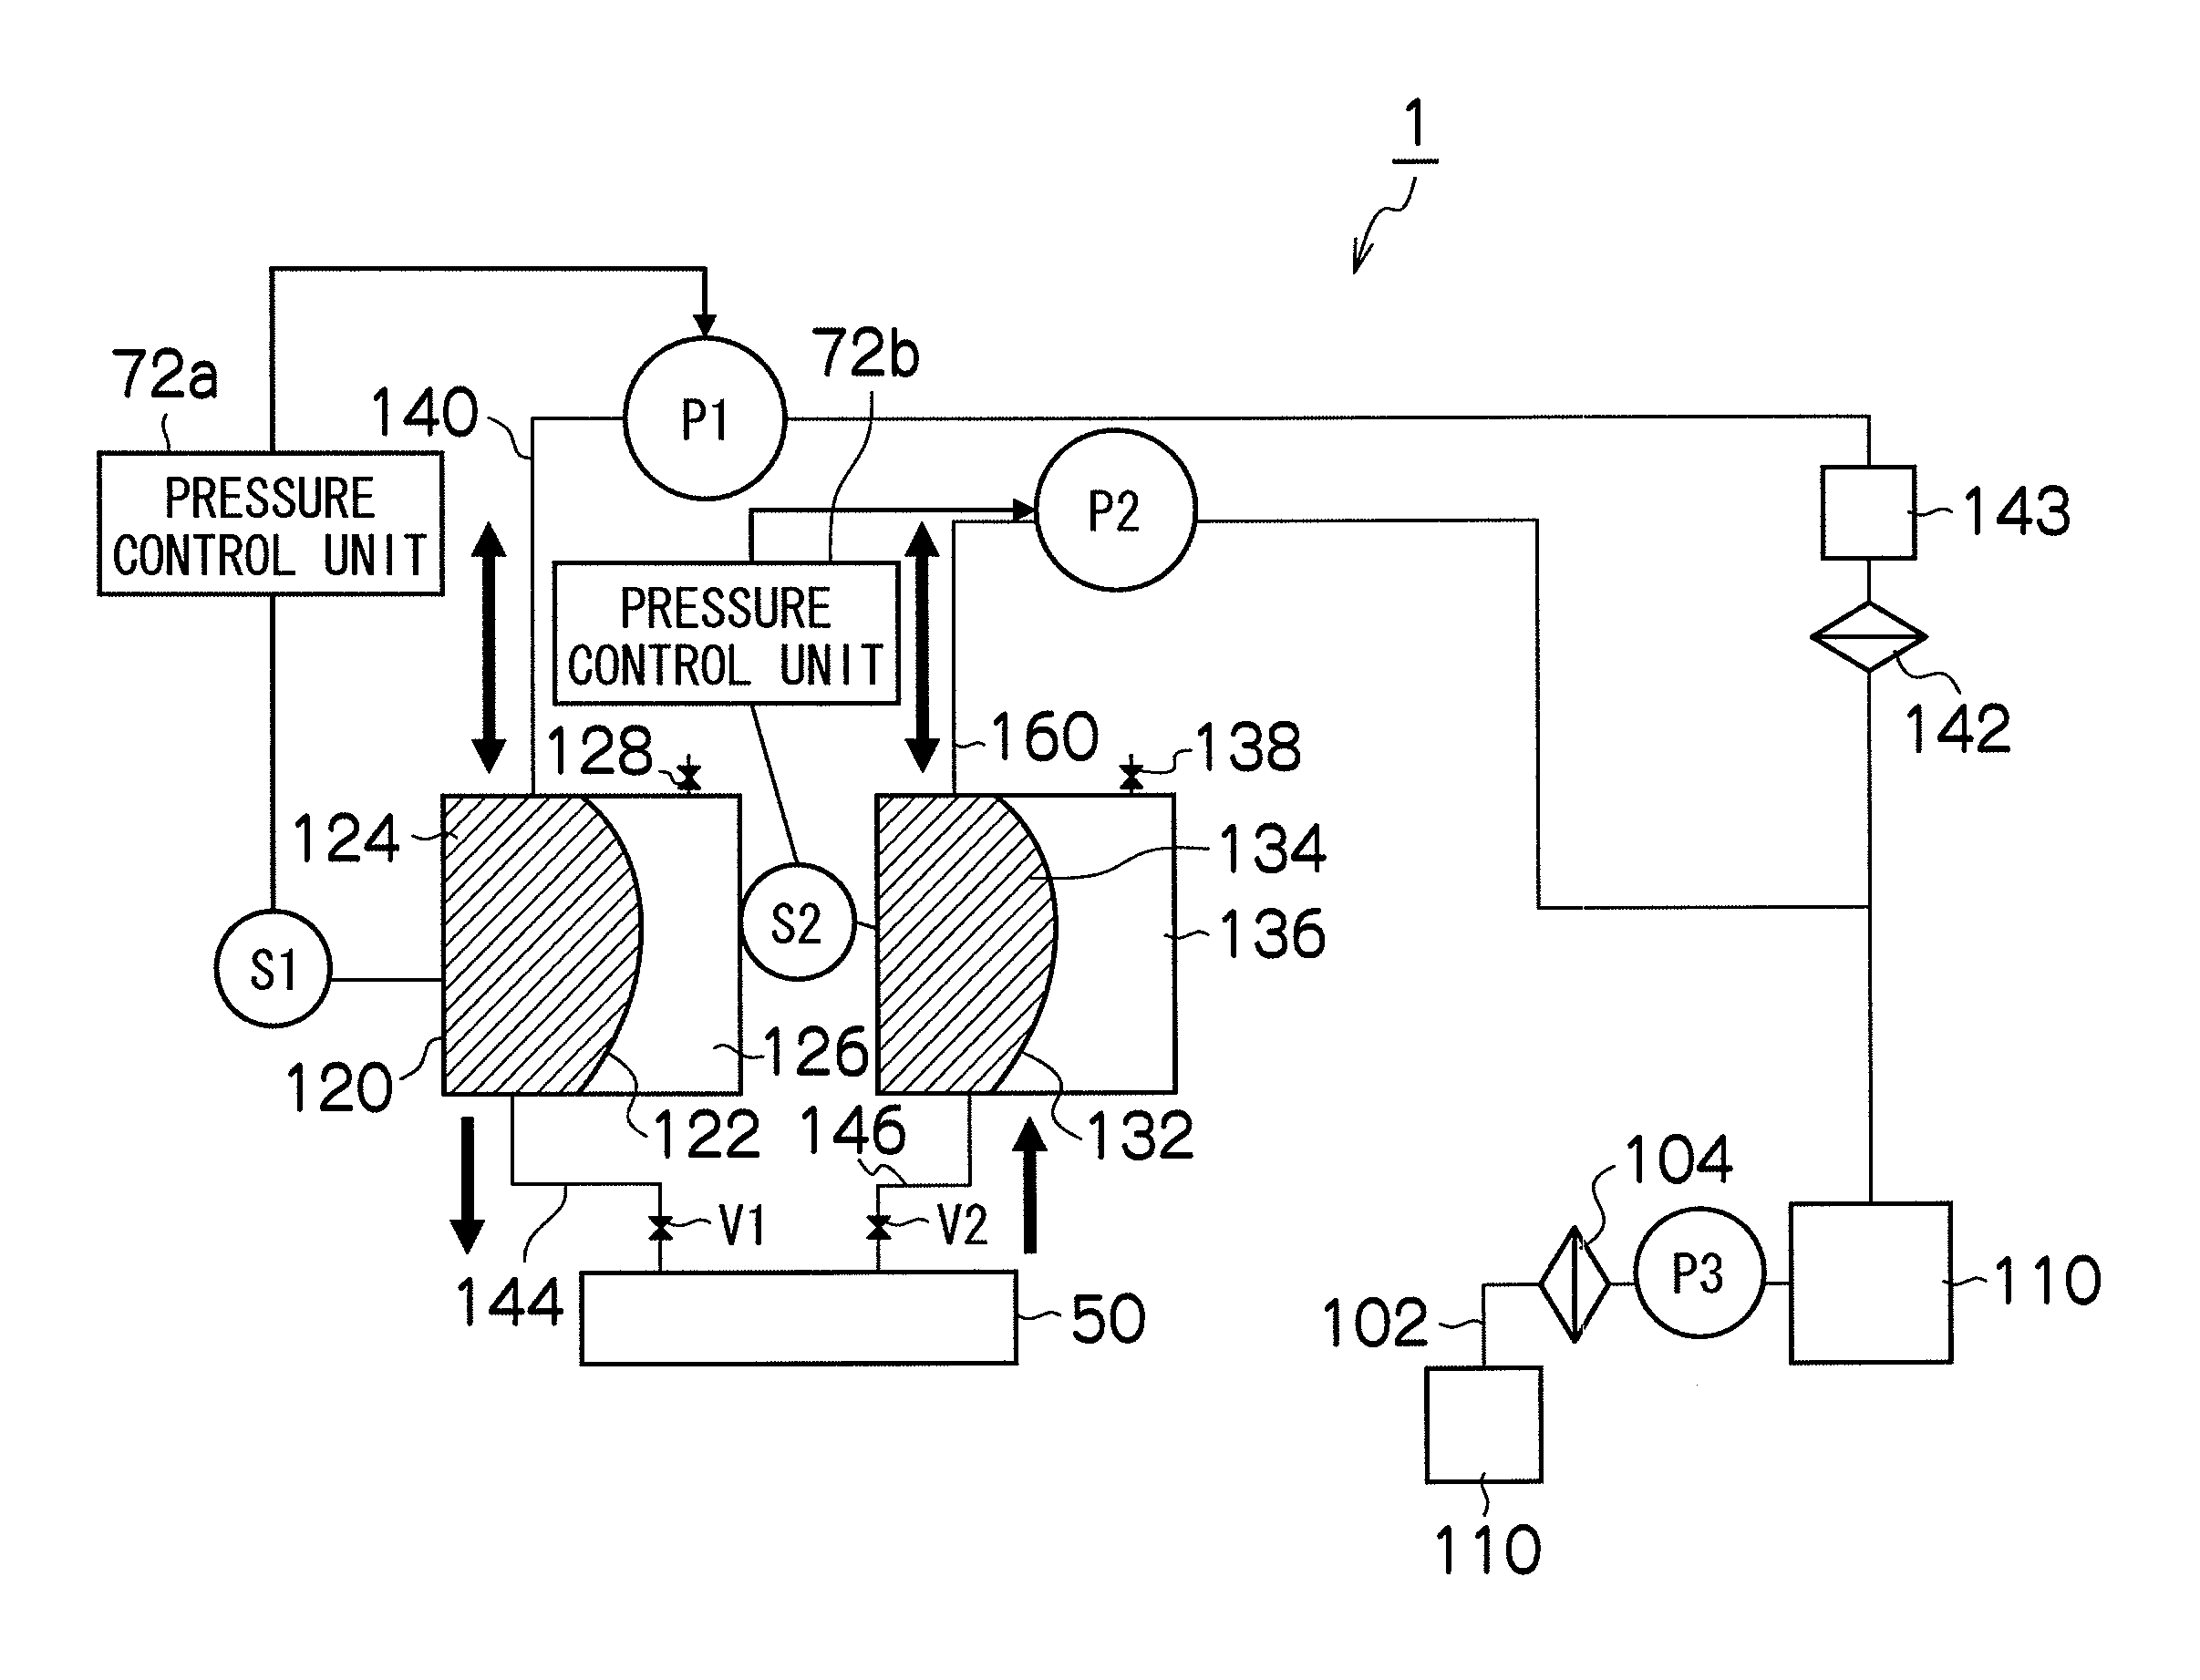 Inkjet recording apparatus and method